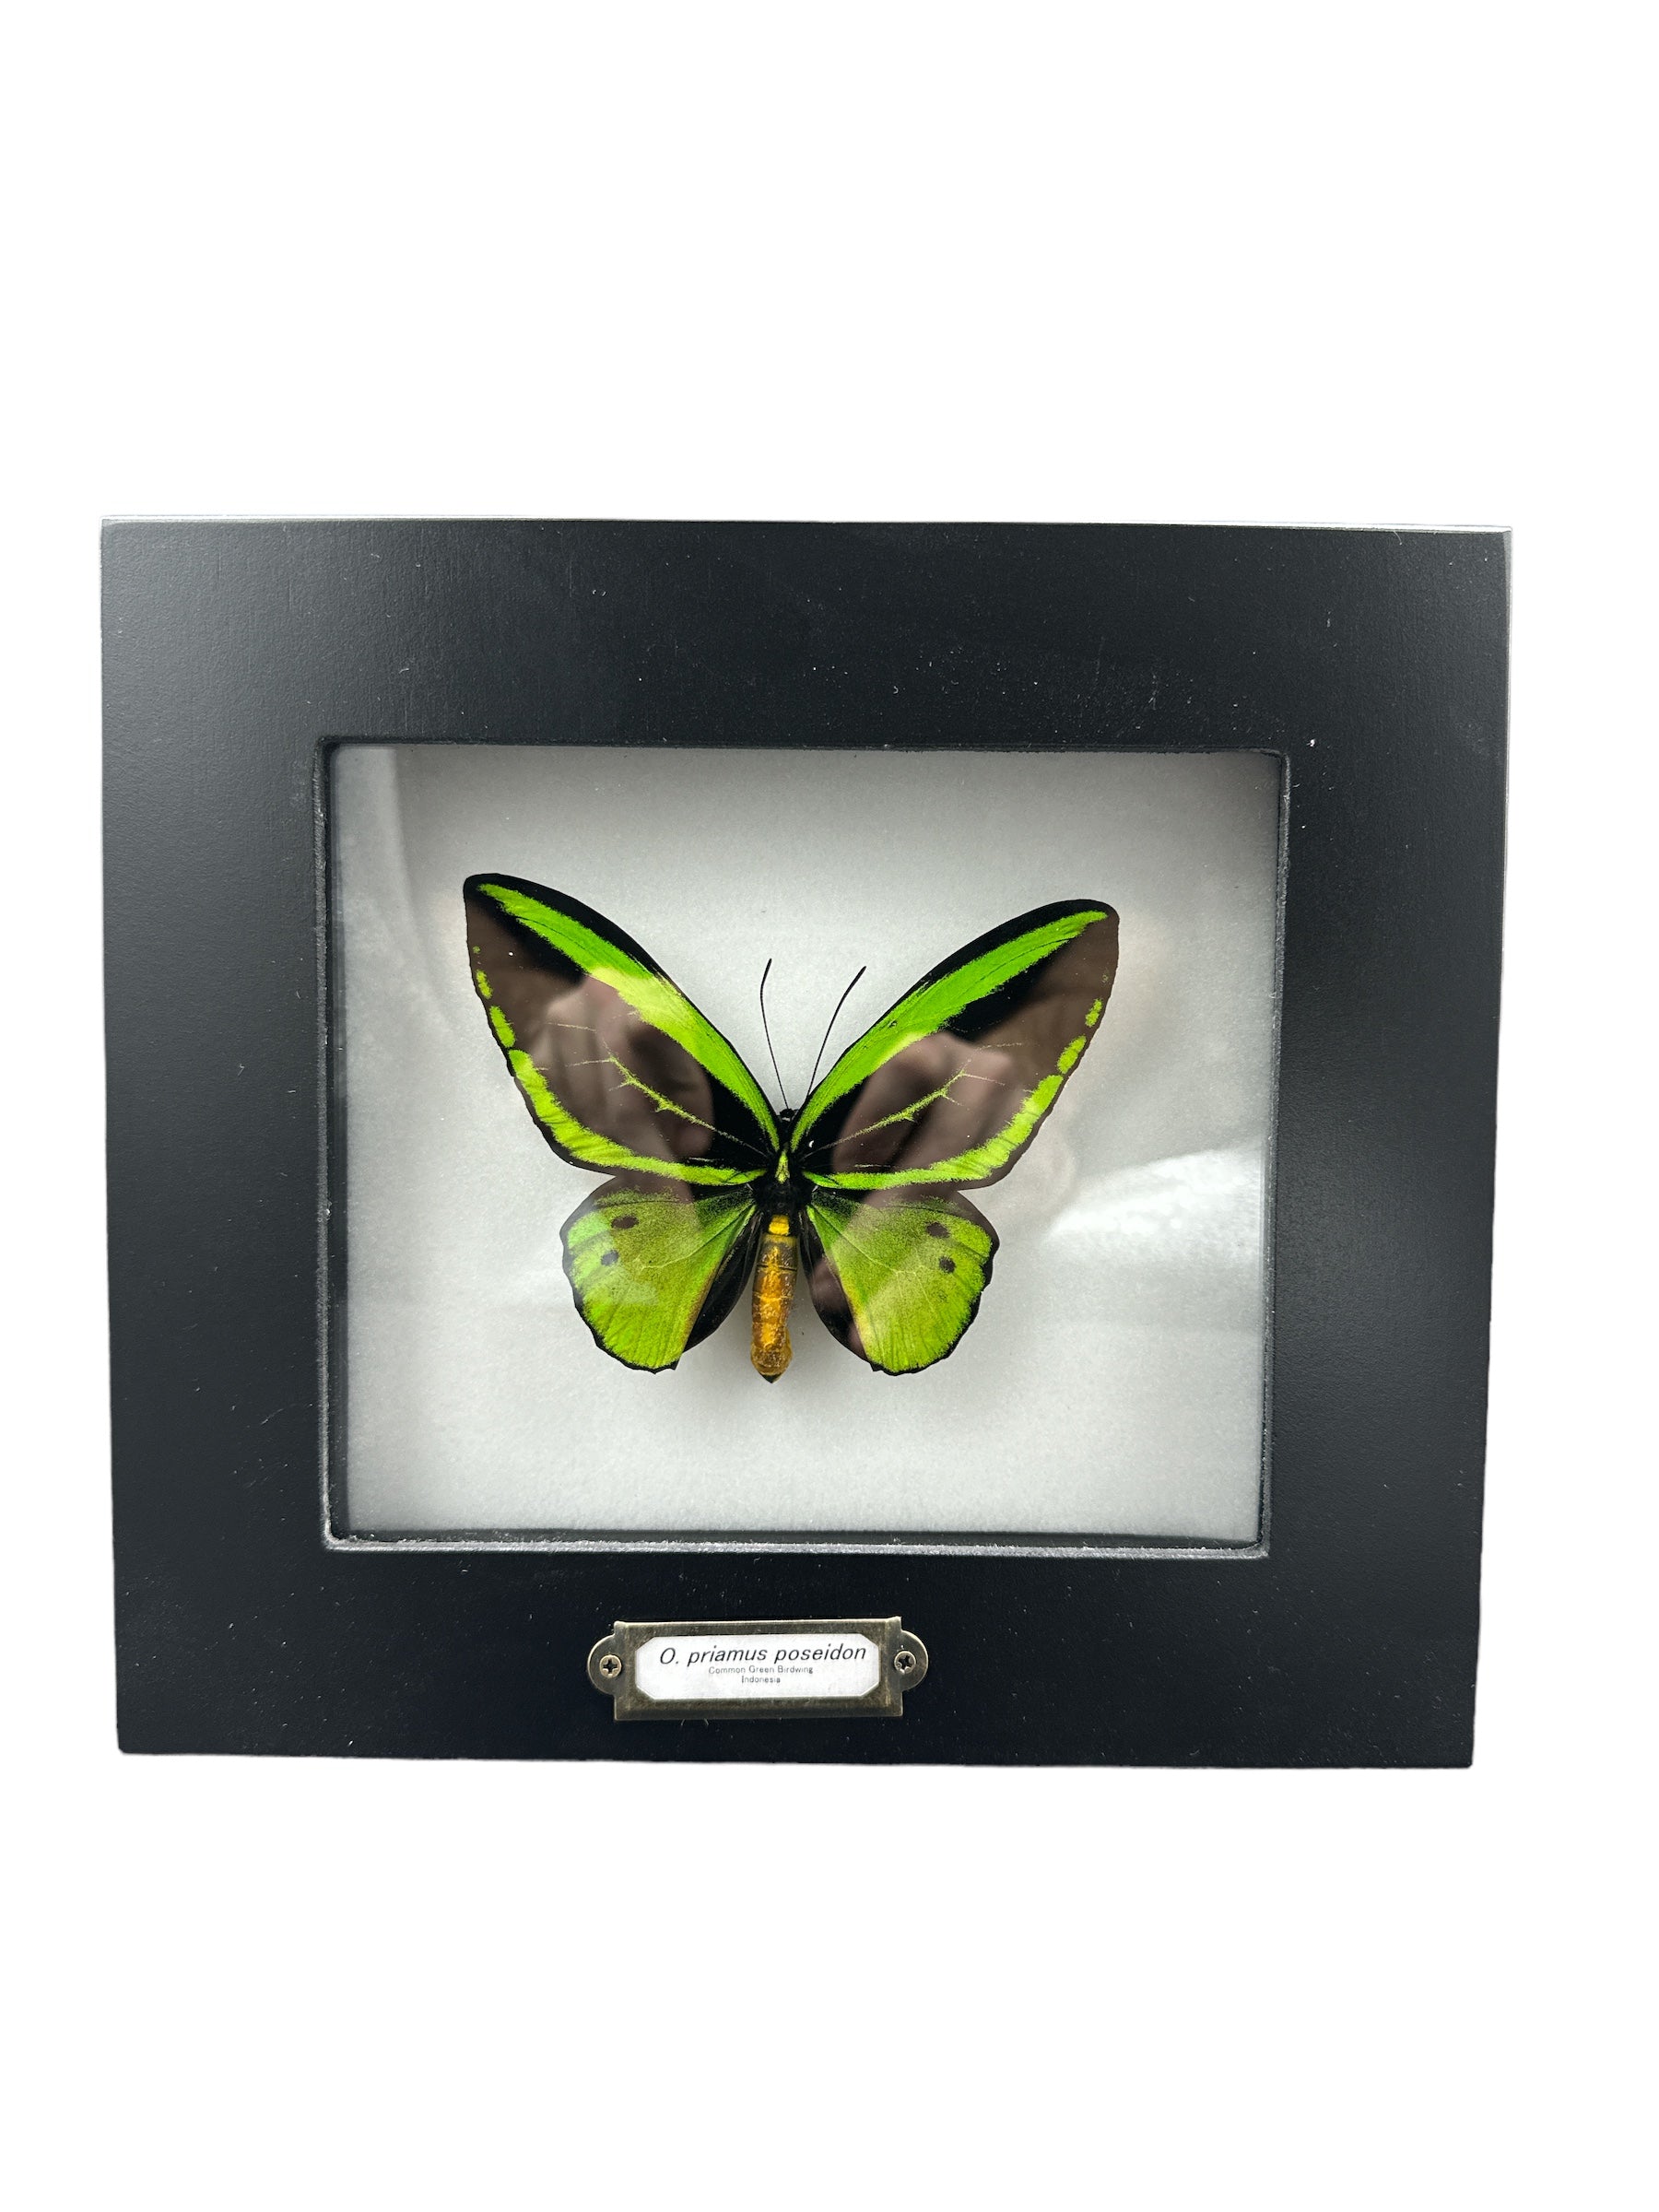 Common Green Birdwing Butterfly - Male (Ornithoptera priamus poseidon) - 5x6" Frame